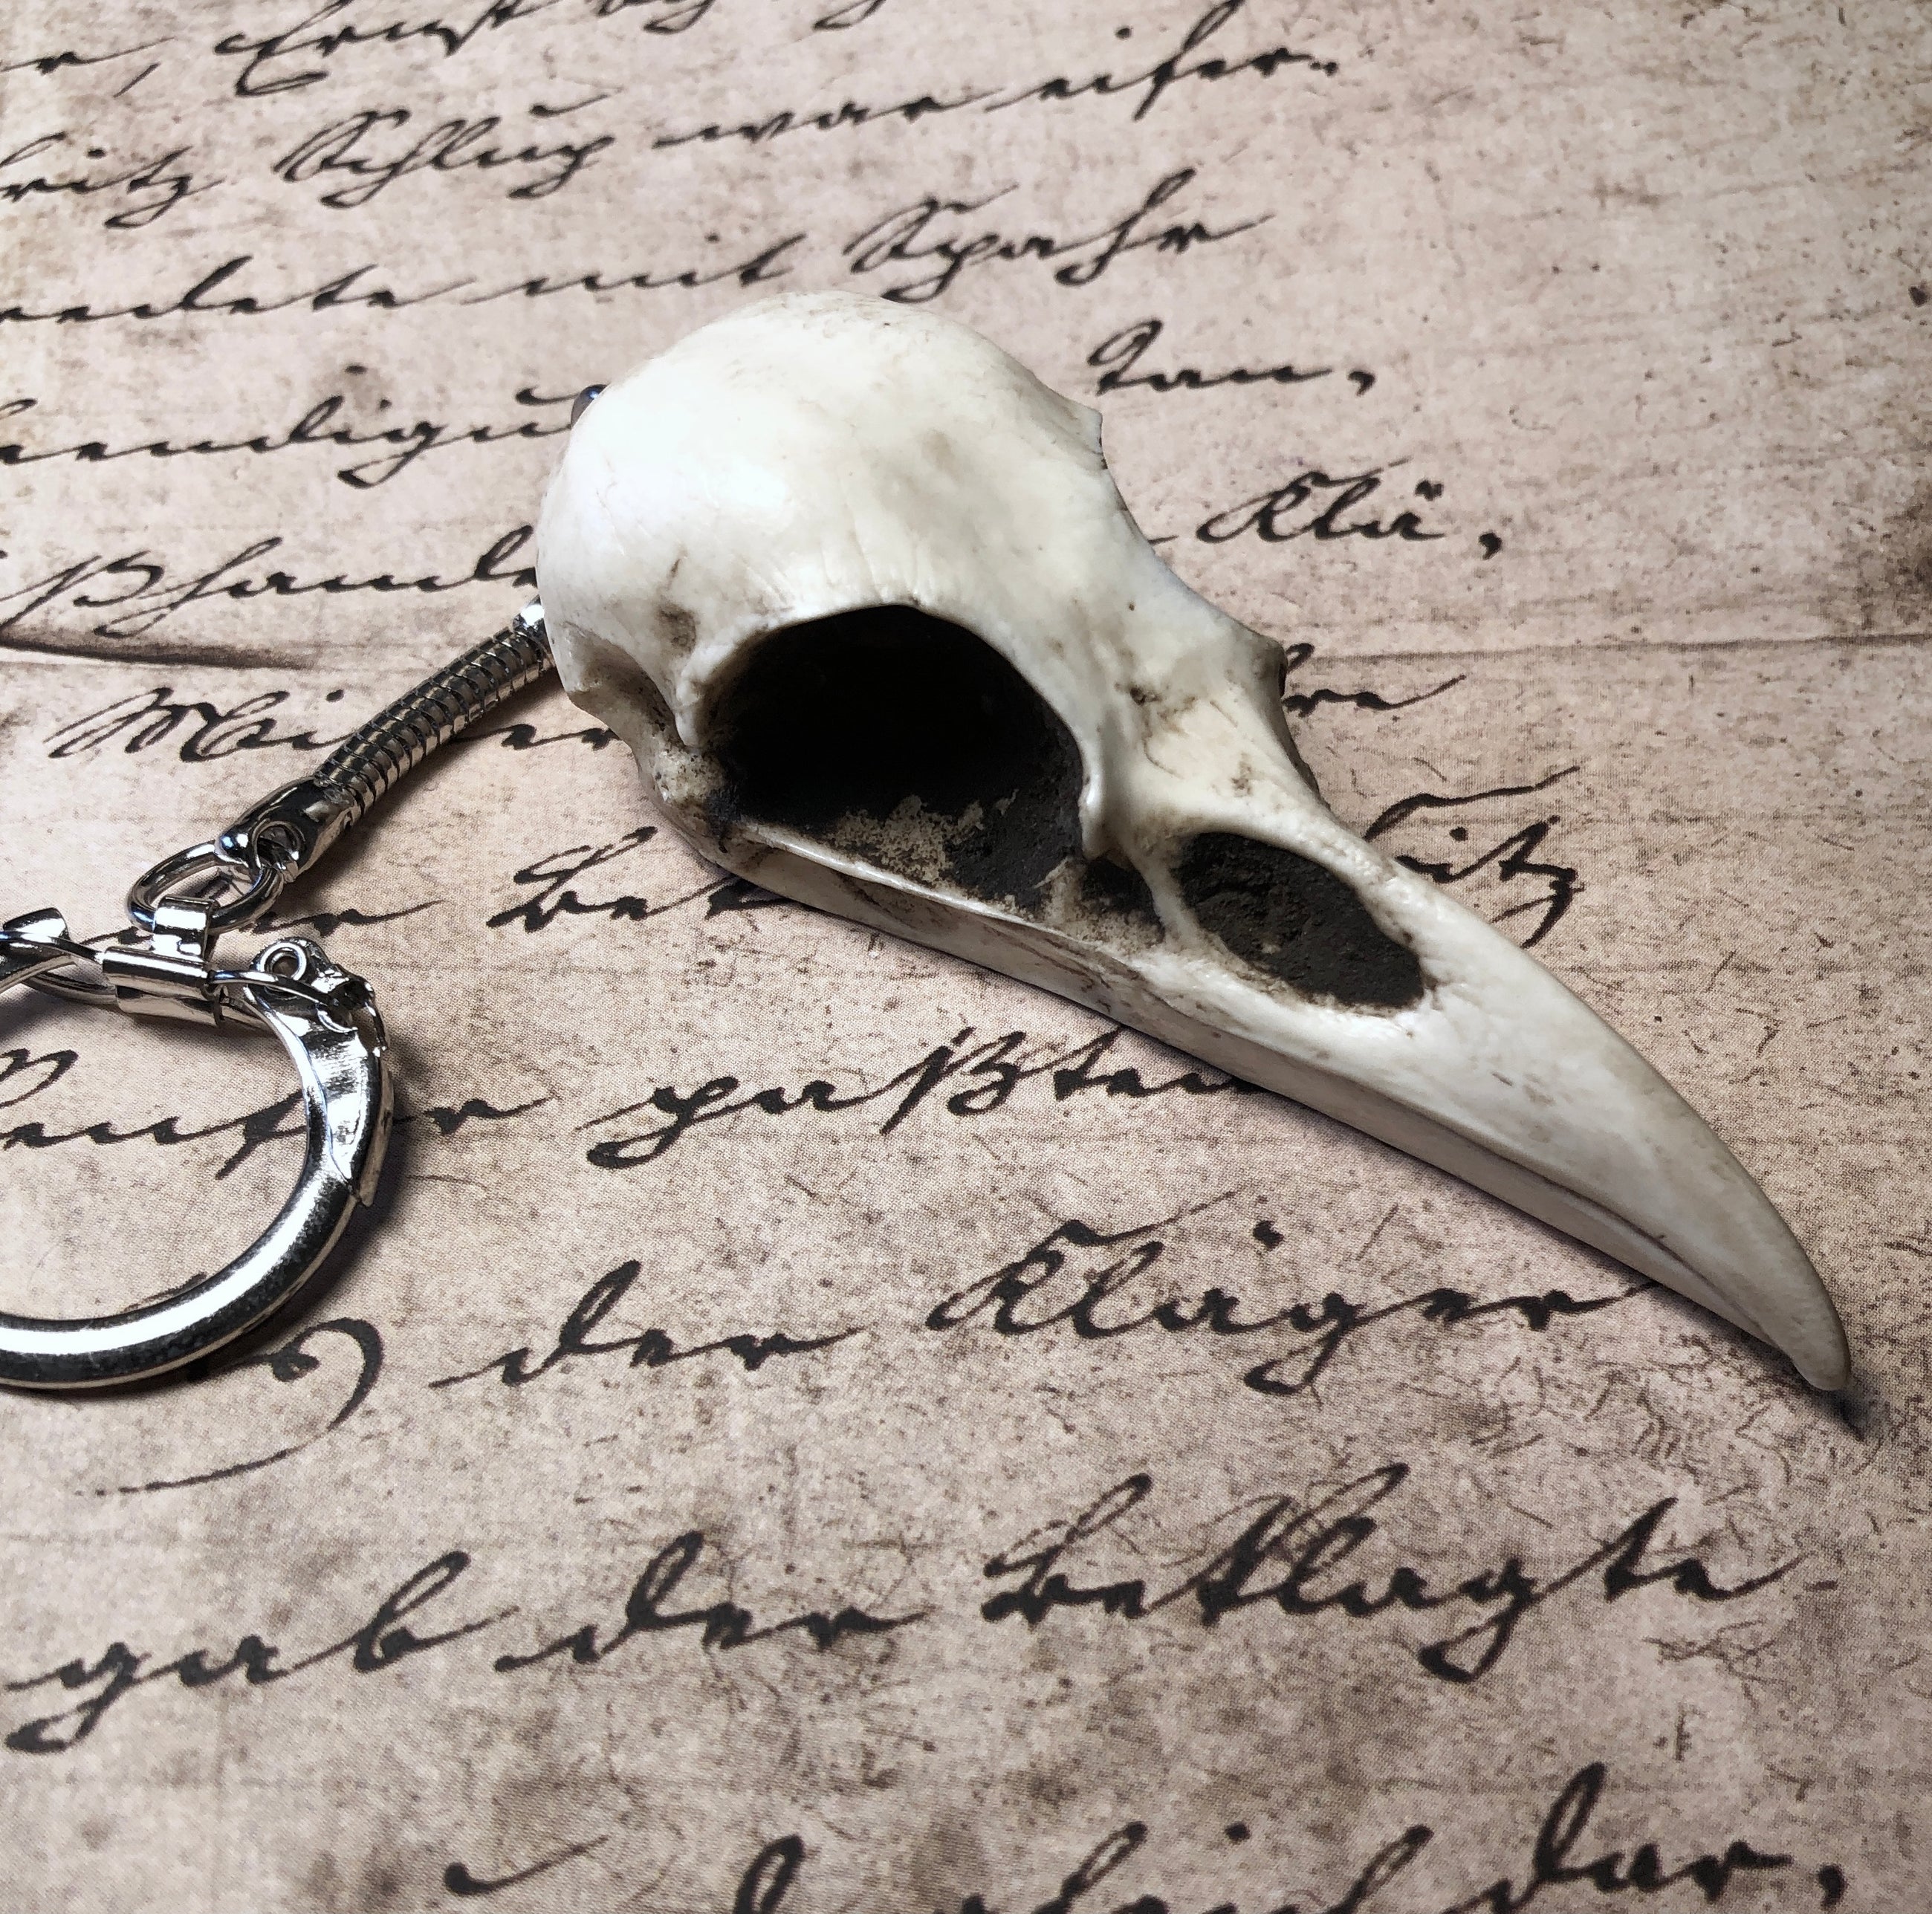 raven skull keychain for goth or biker keys with a creepy skull